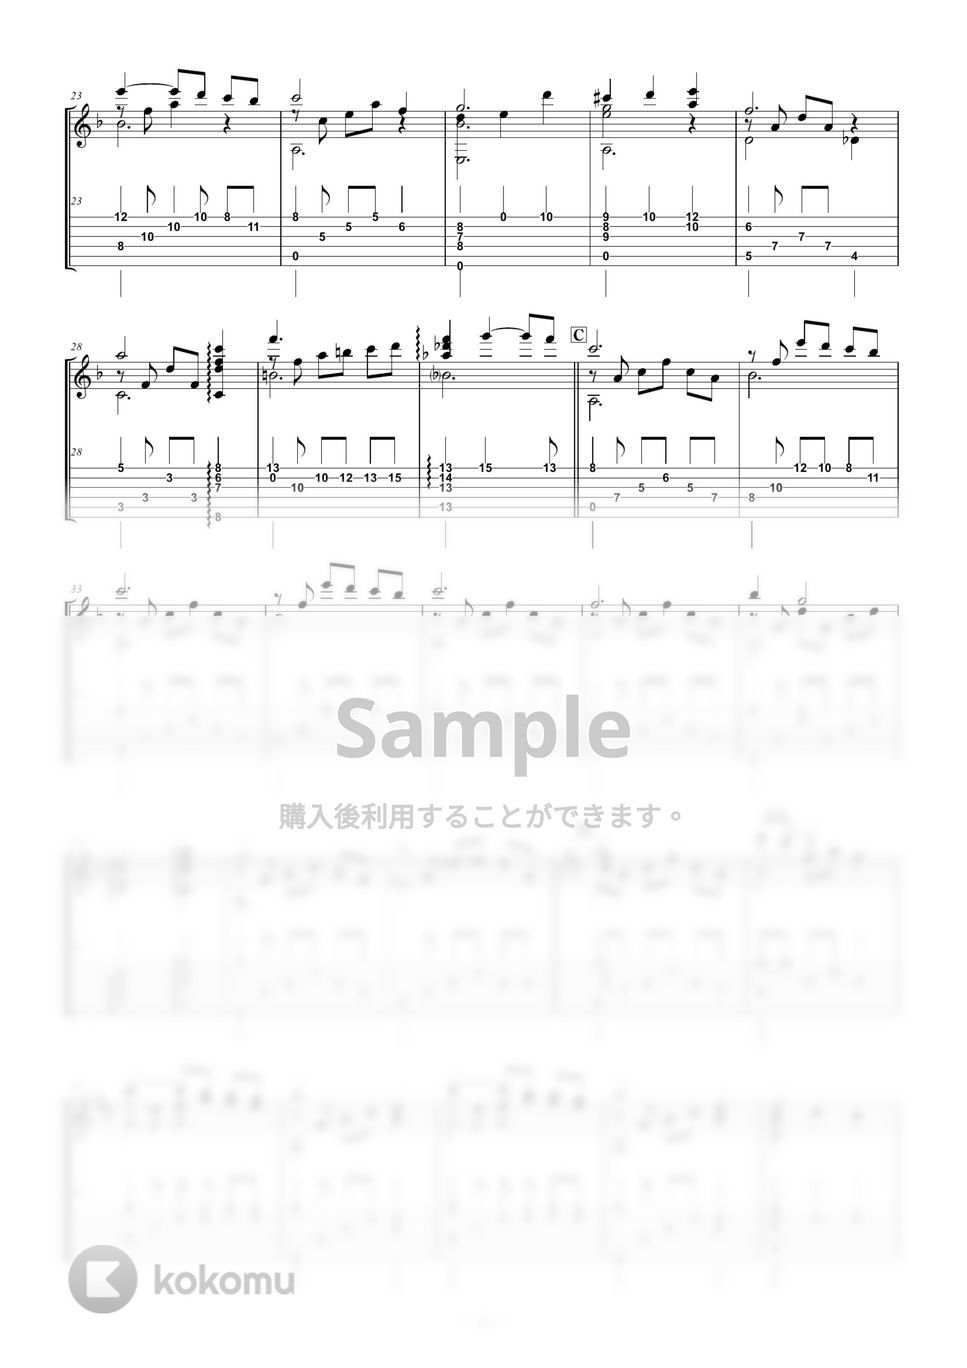 Henry Mancini - Moon River【Solo Guitar TAB】 by shindome